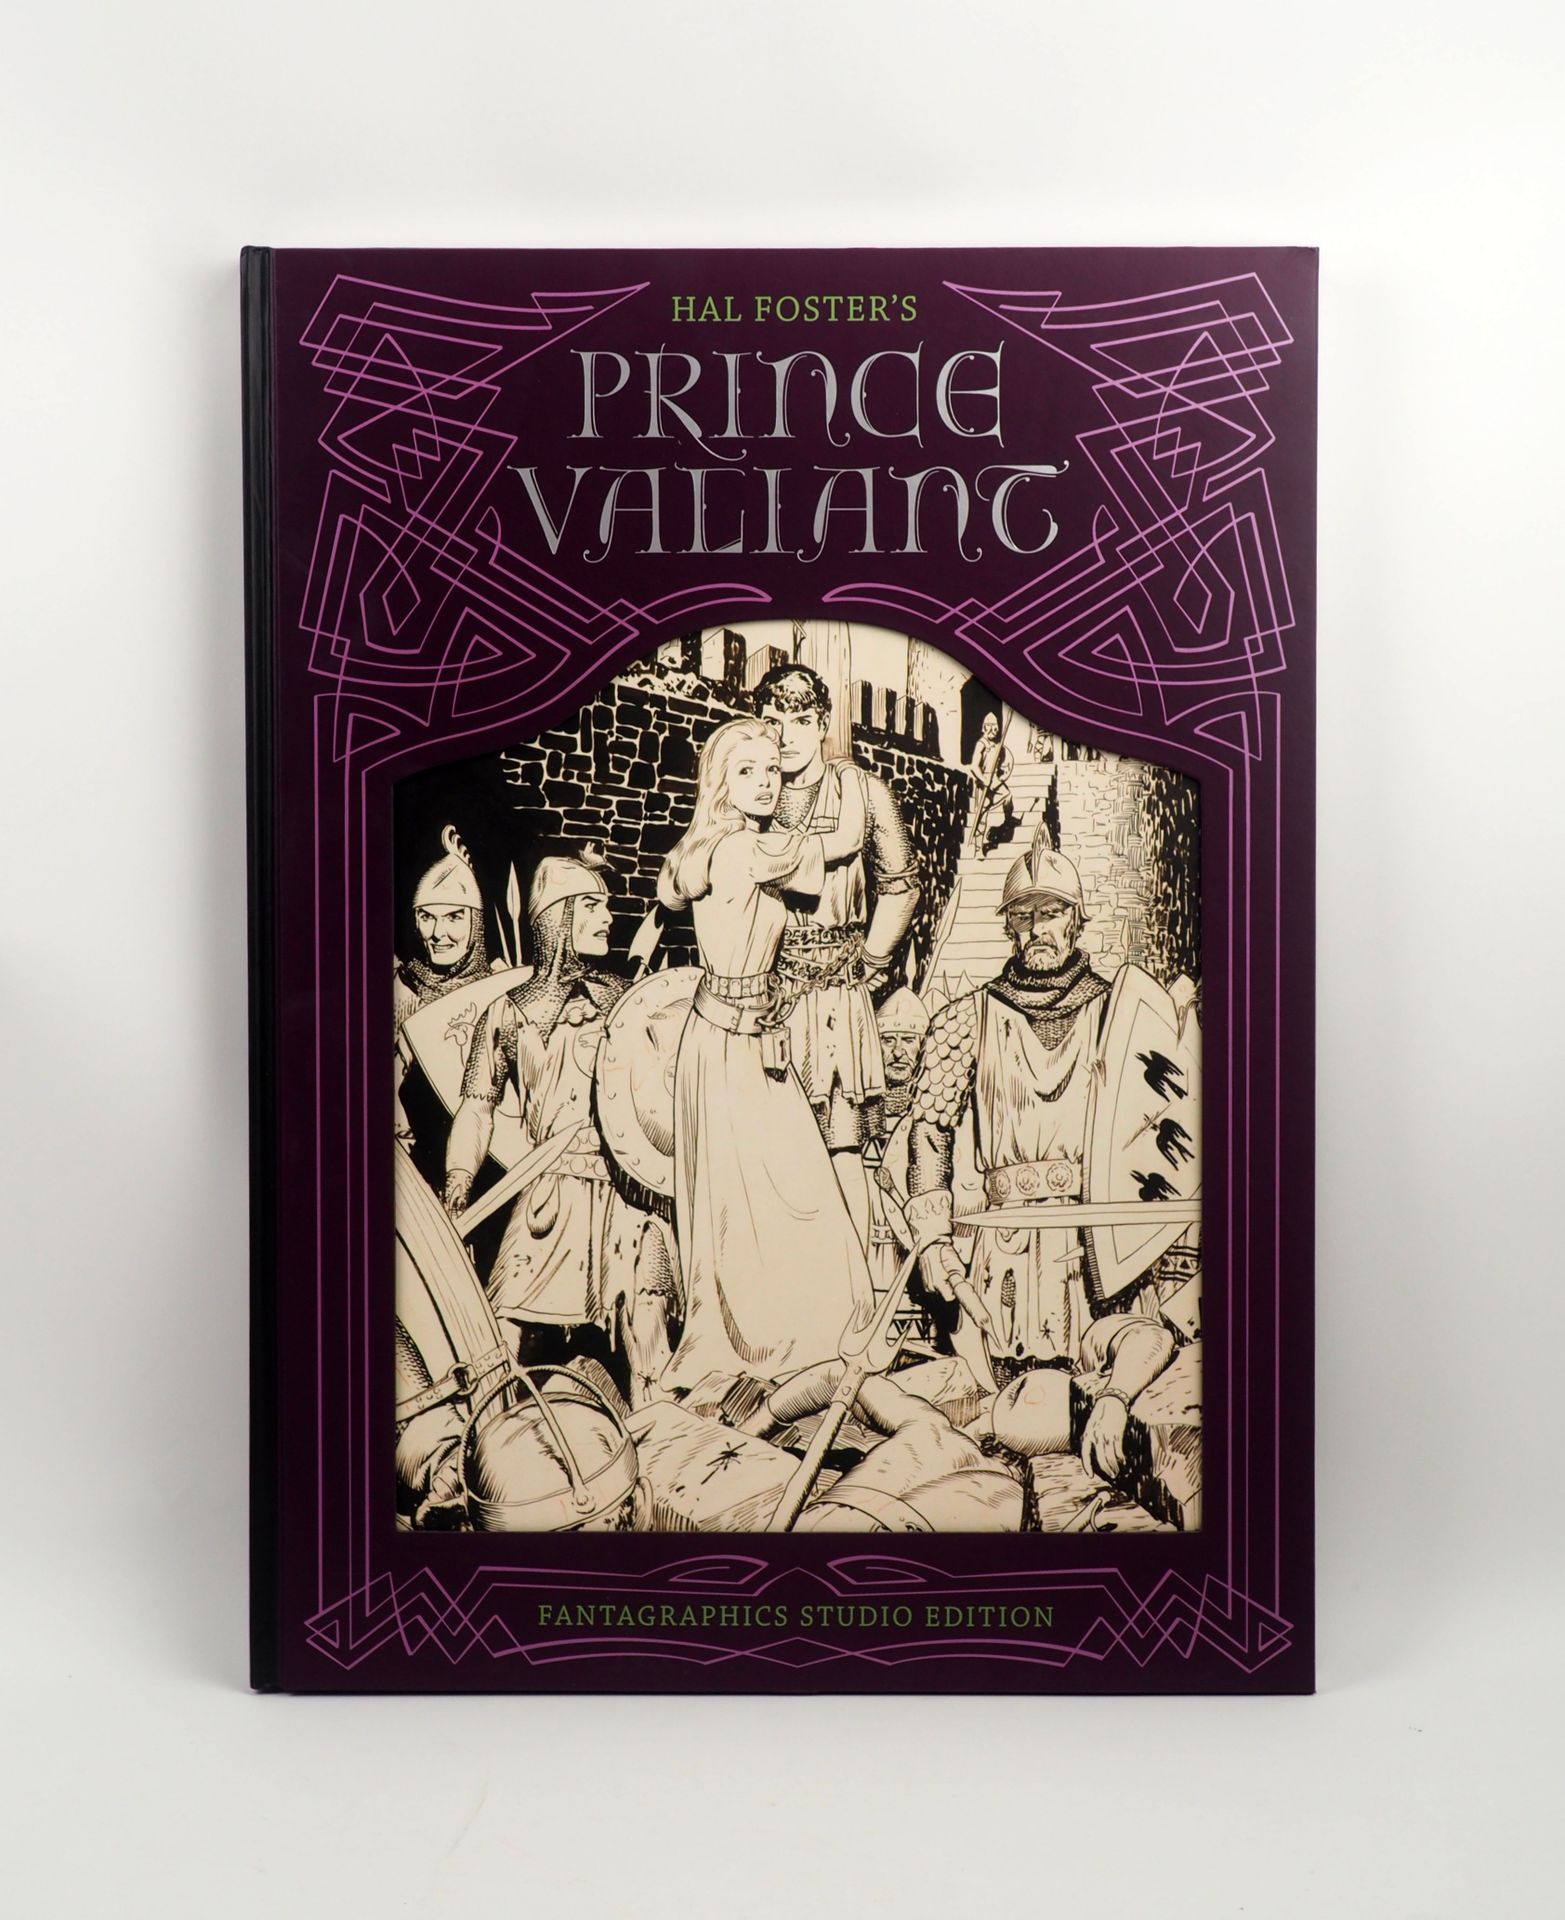 Null 福斯特
维拉提王子
由Fantagraphics工作室版出版的乐谱格式专辑
完整的传真页